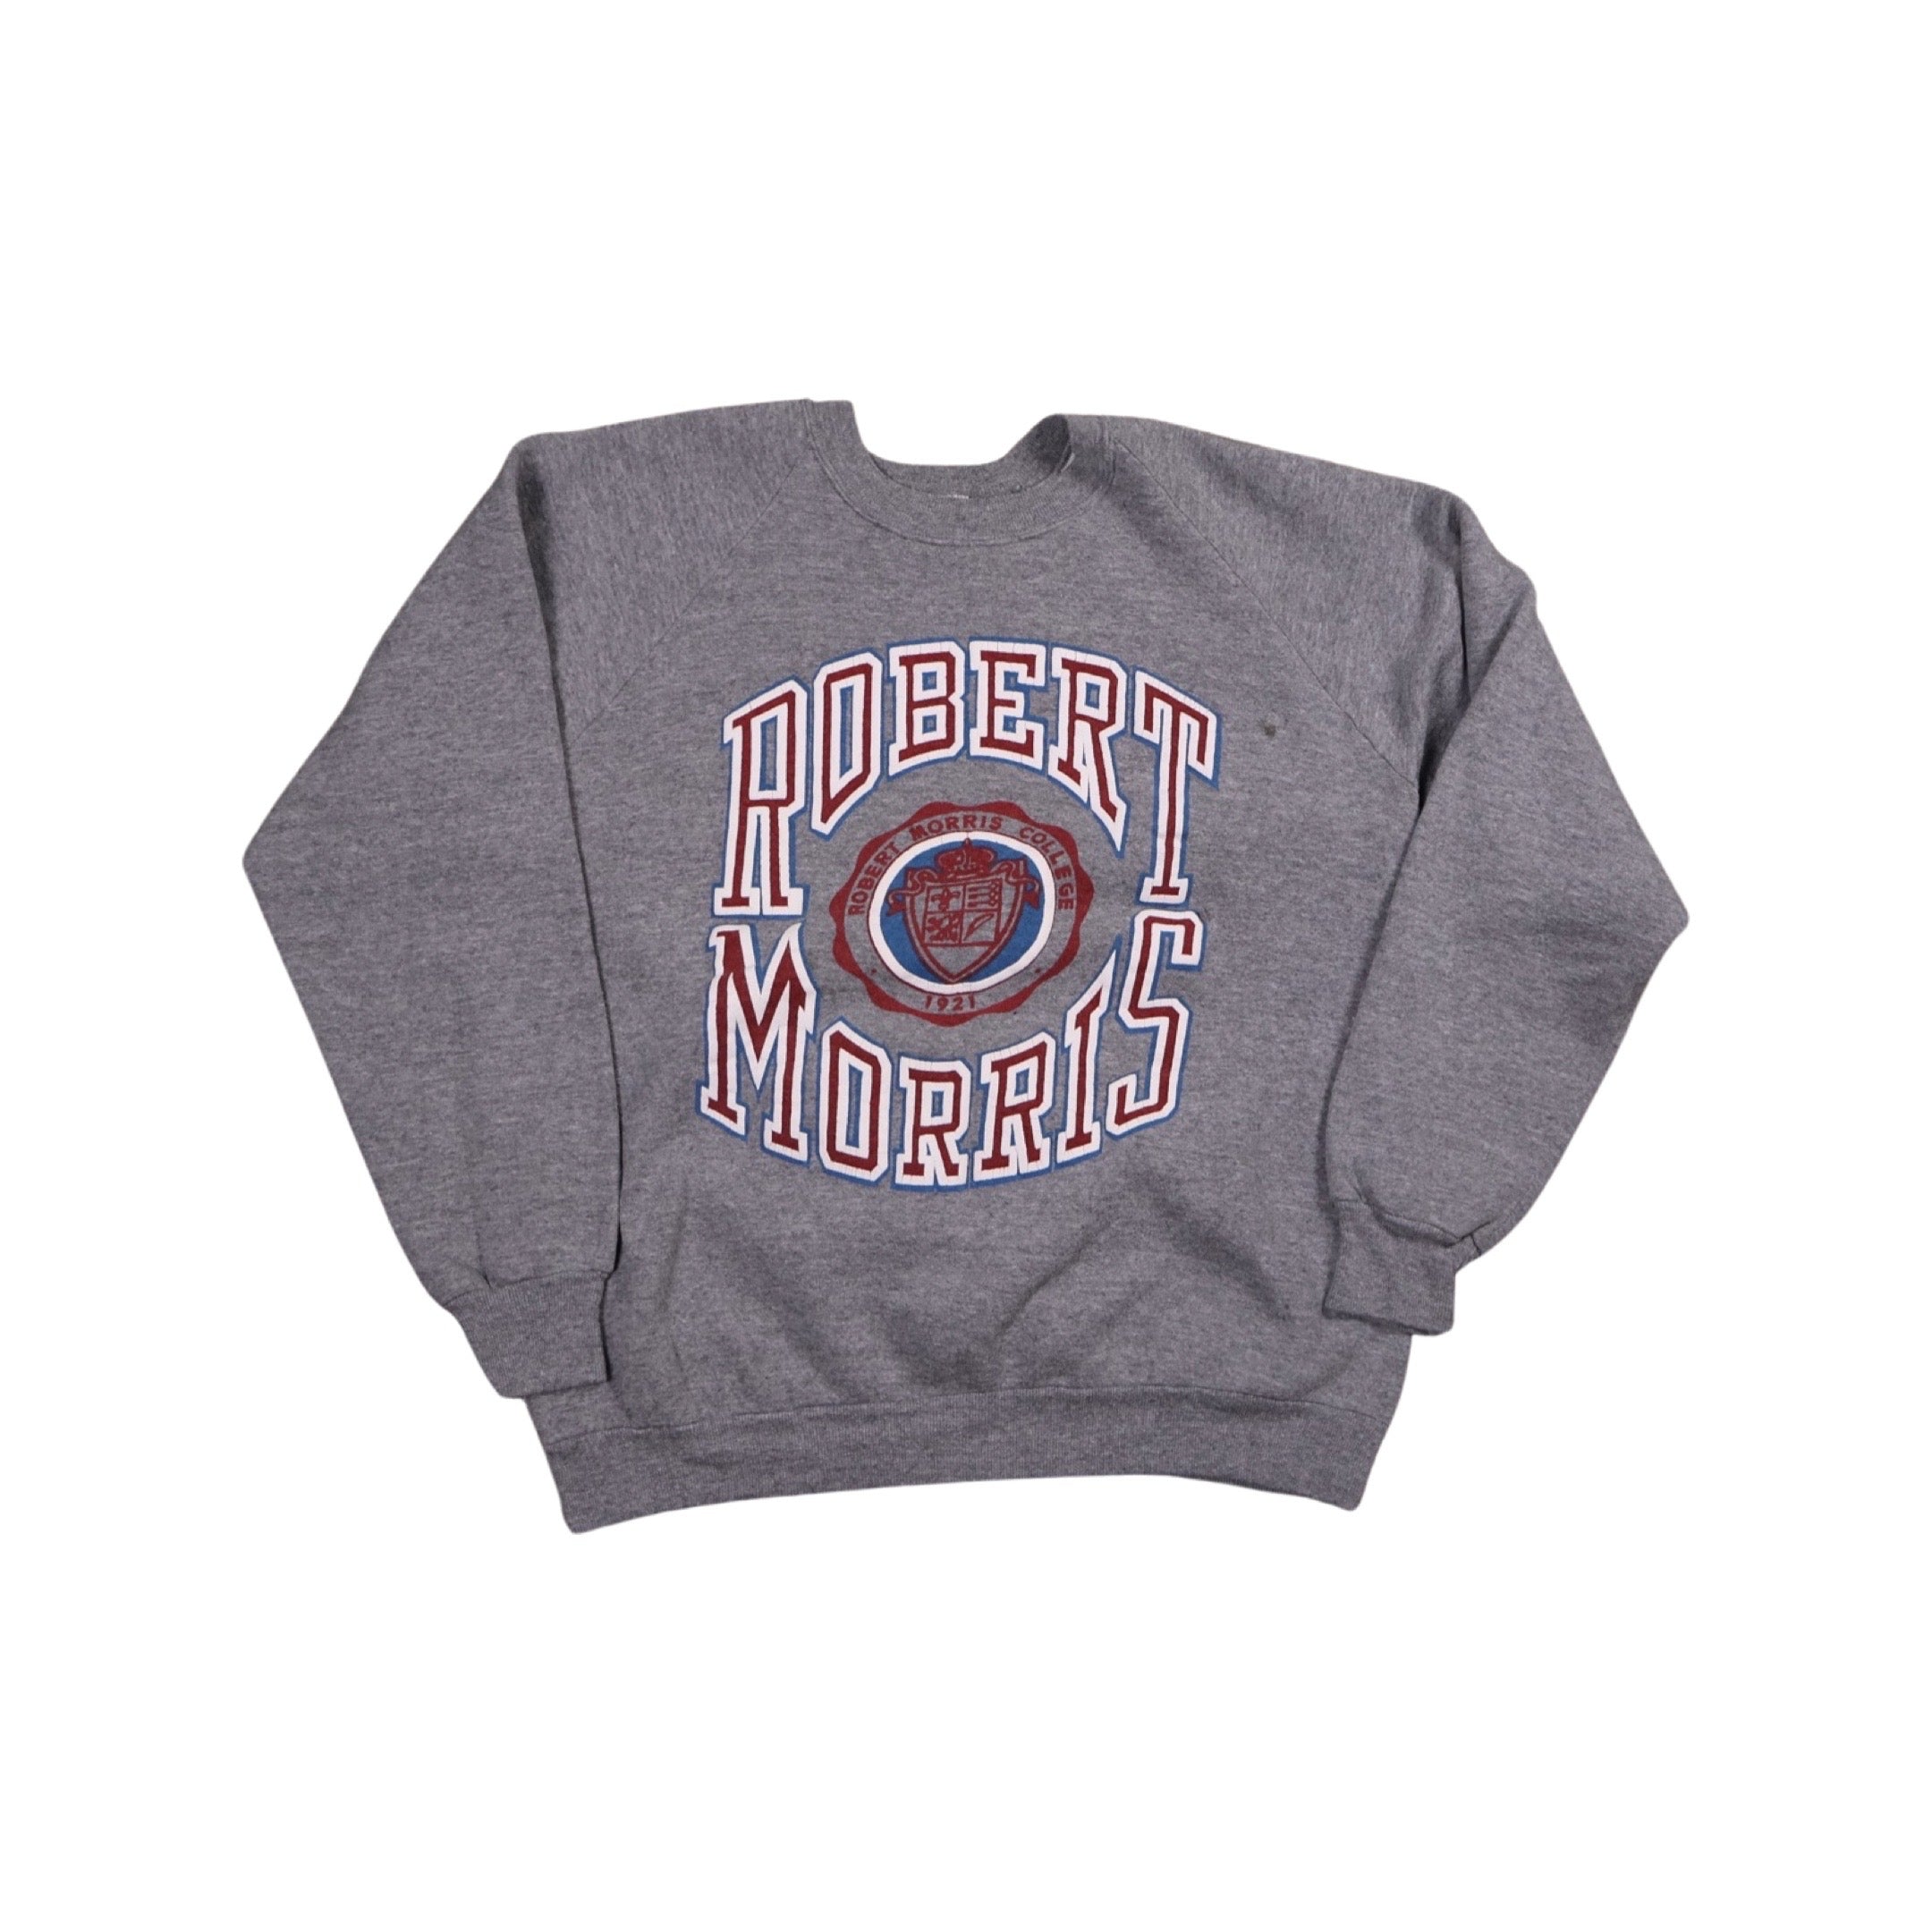 Robert Morris Emblem 90s Sweater (Large)